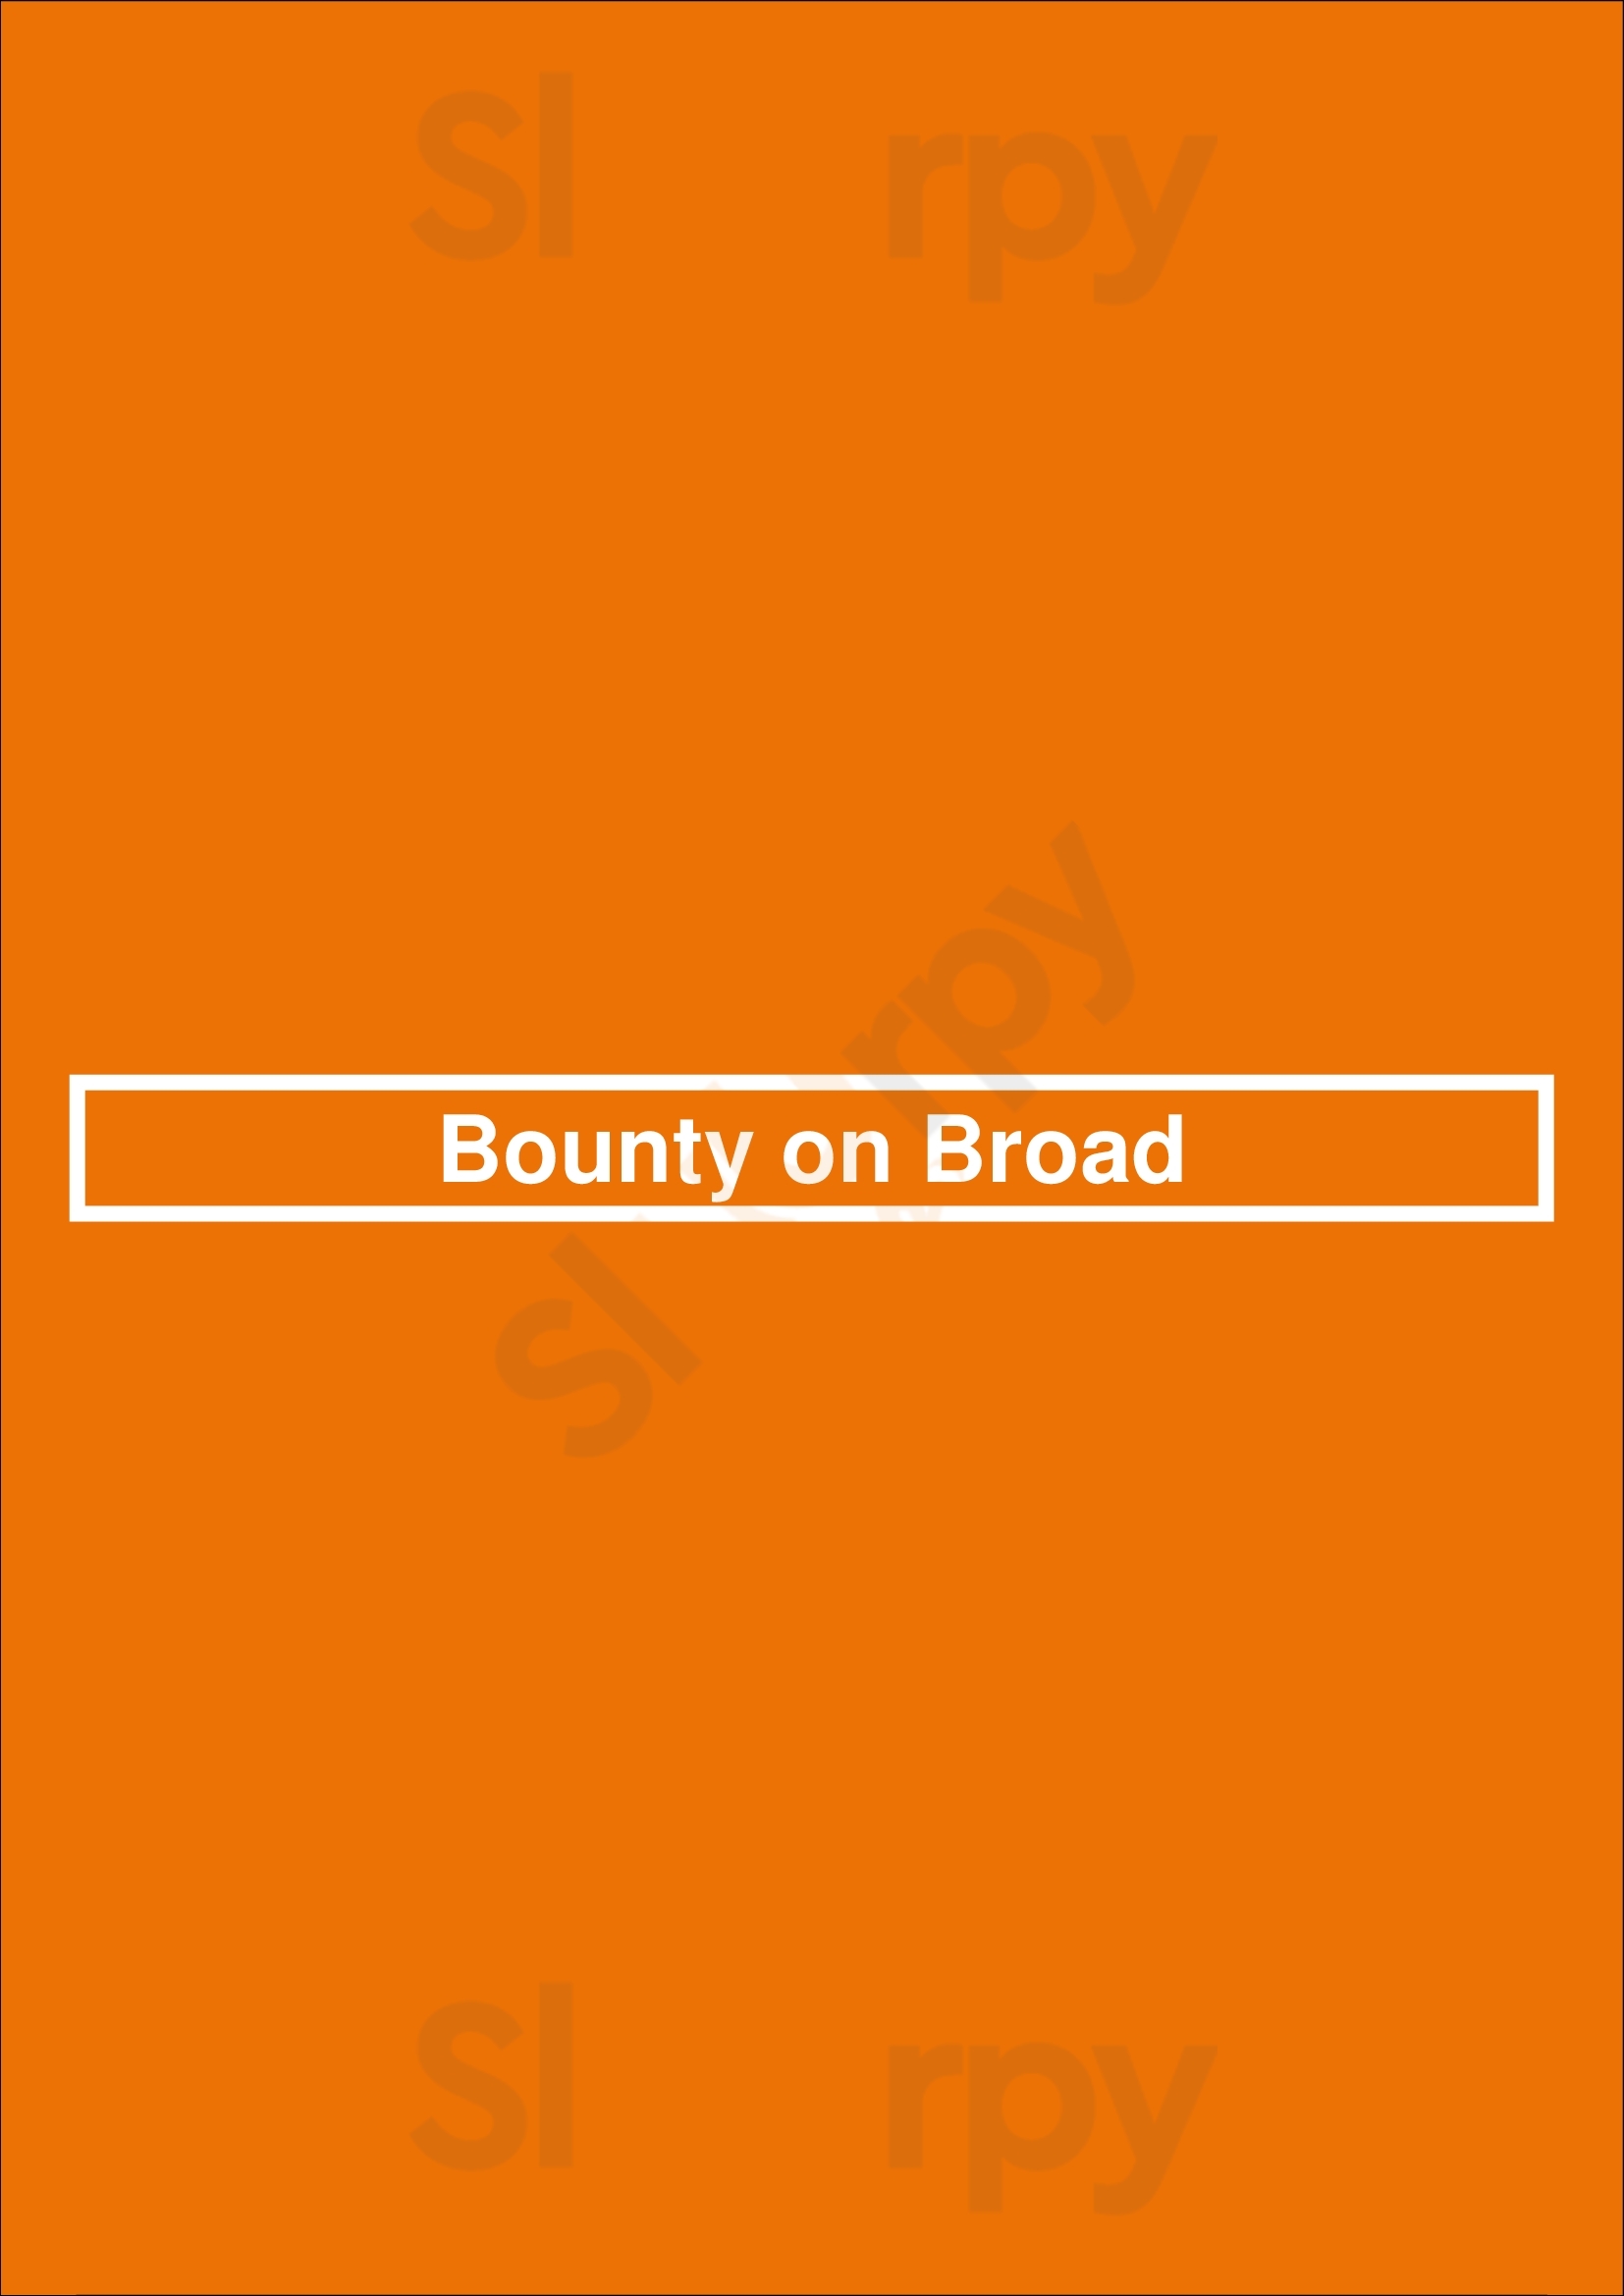 Bounty On Broad Memphis Menu - 1